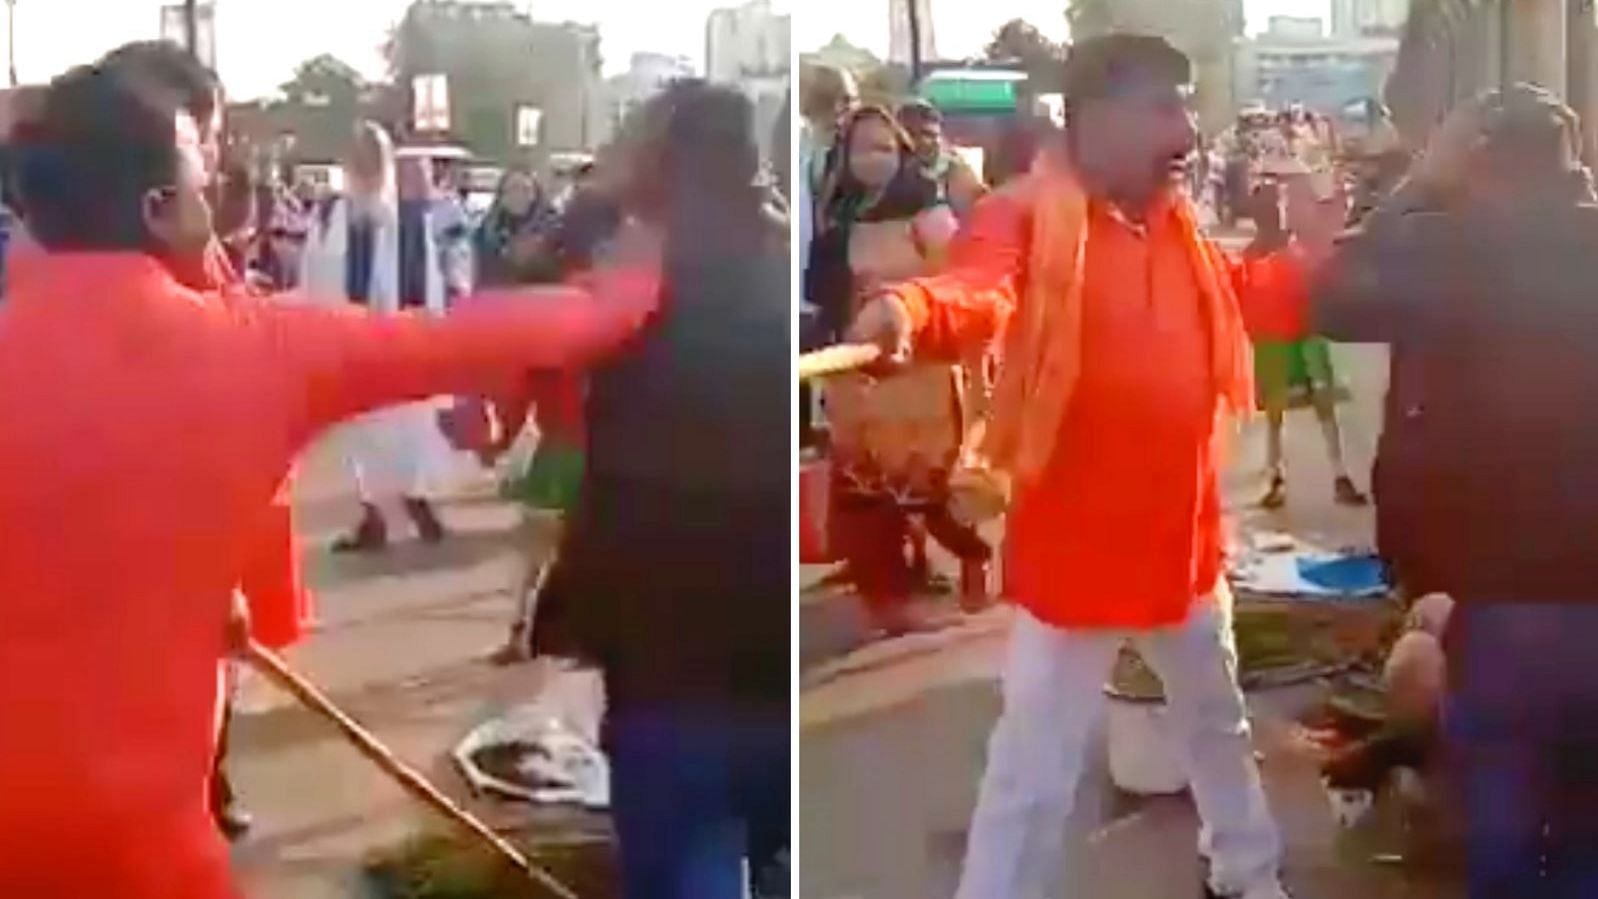 Saffron clad men attacked the Kashmiri street vendors.